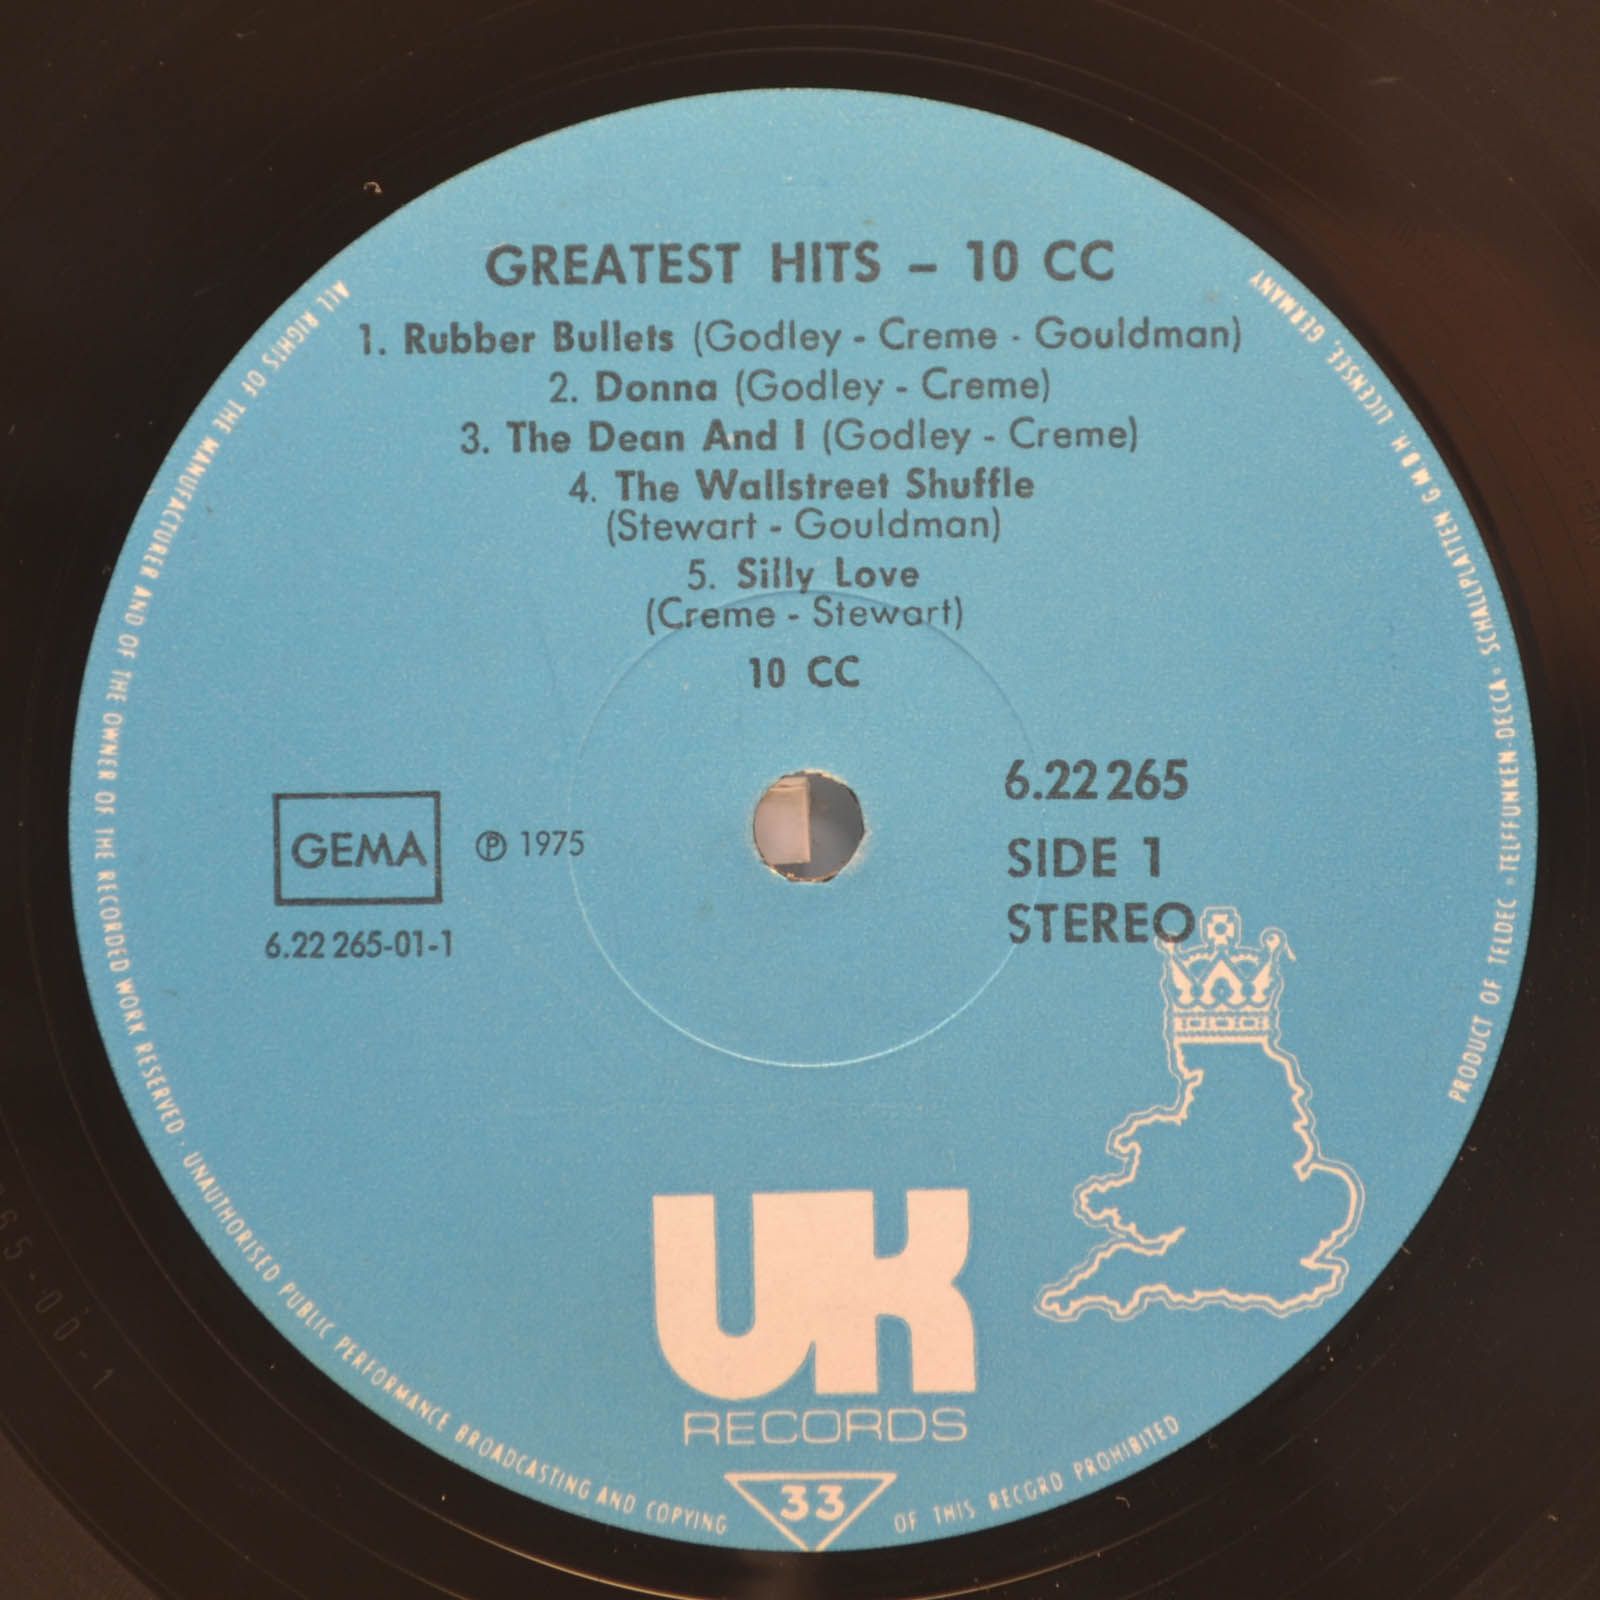 10cc — 100cc Greatest Hits Of 10cc, 1975